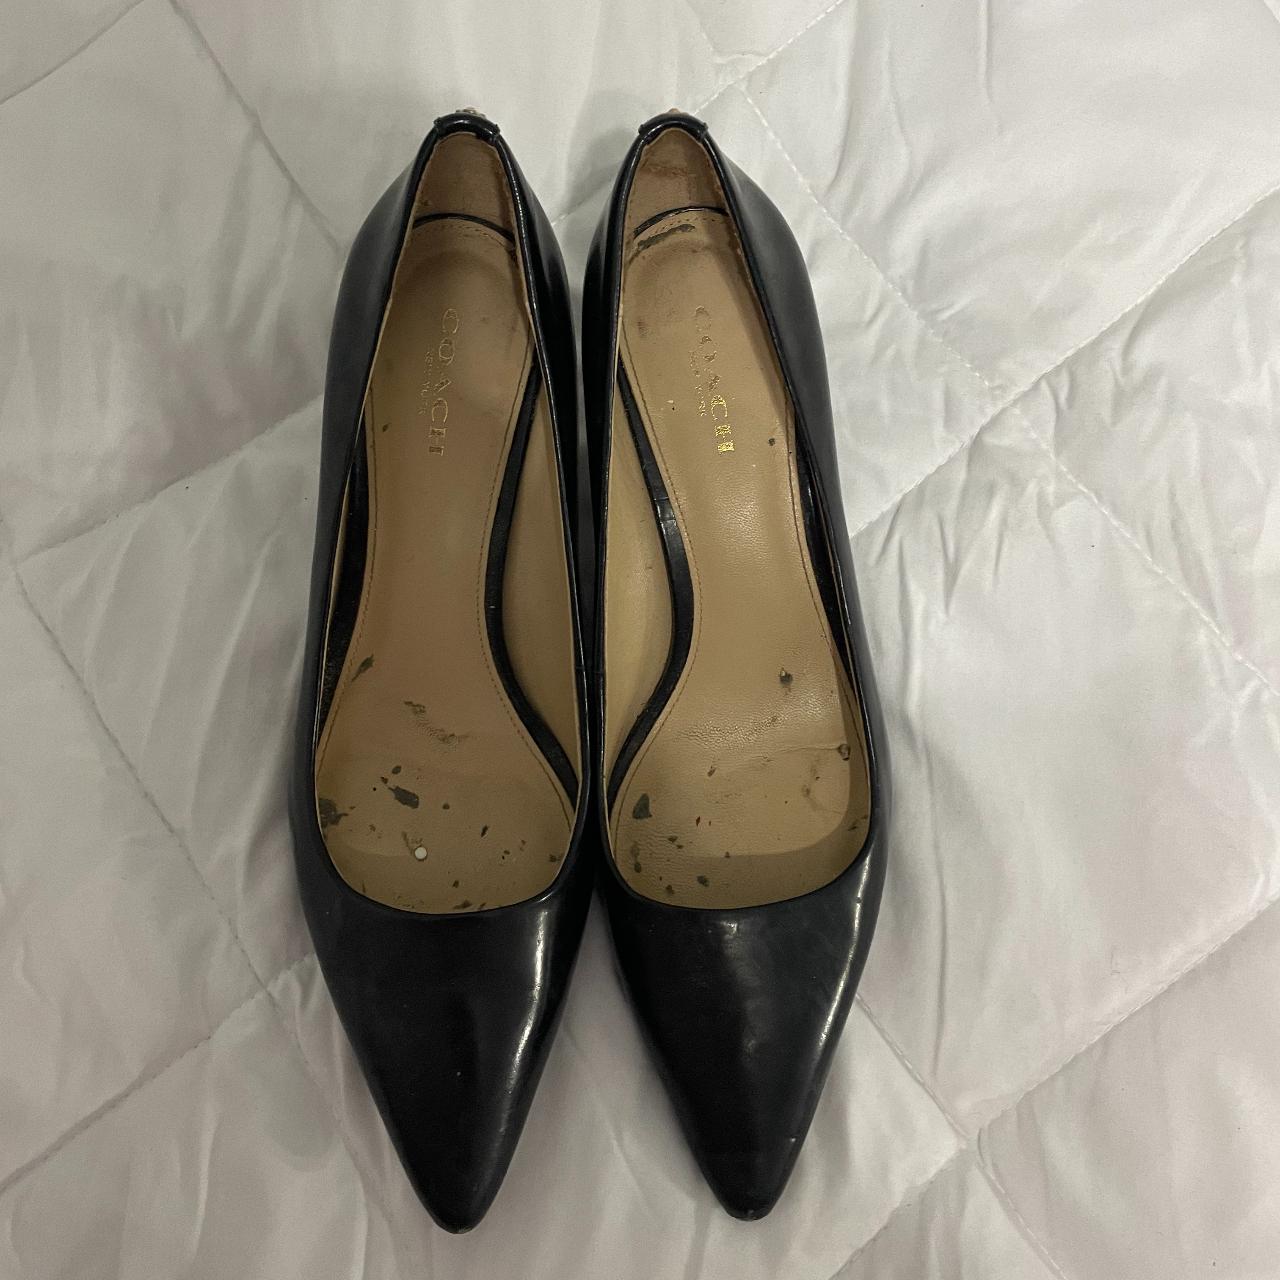 Vintage Coach black kitten heels there is some heel... - Depop